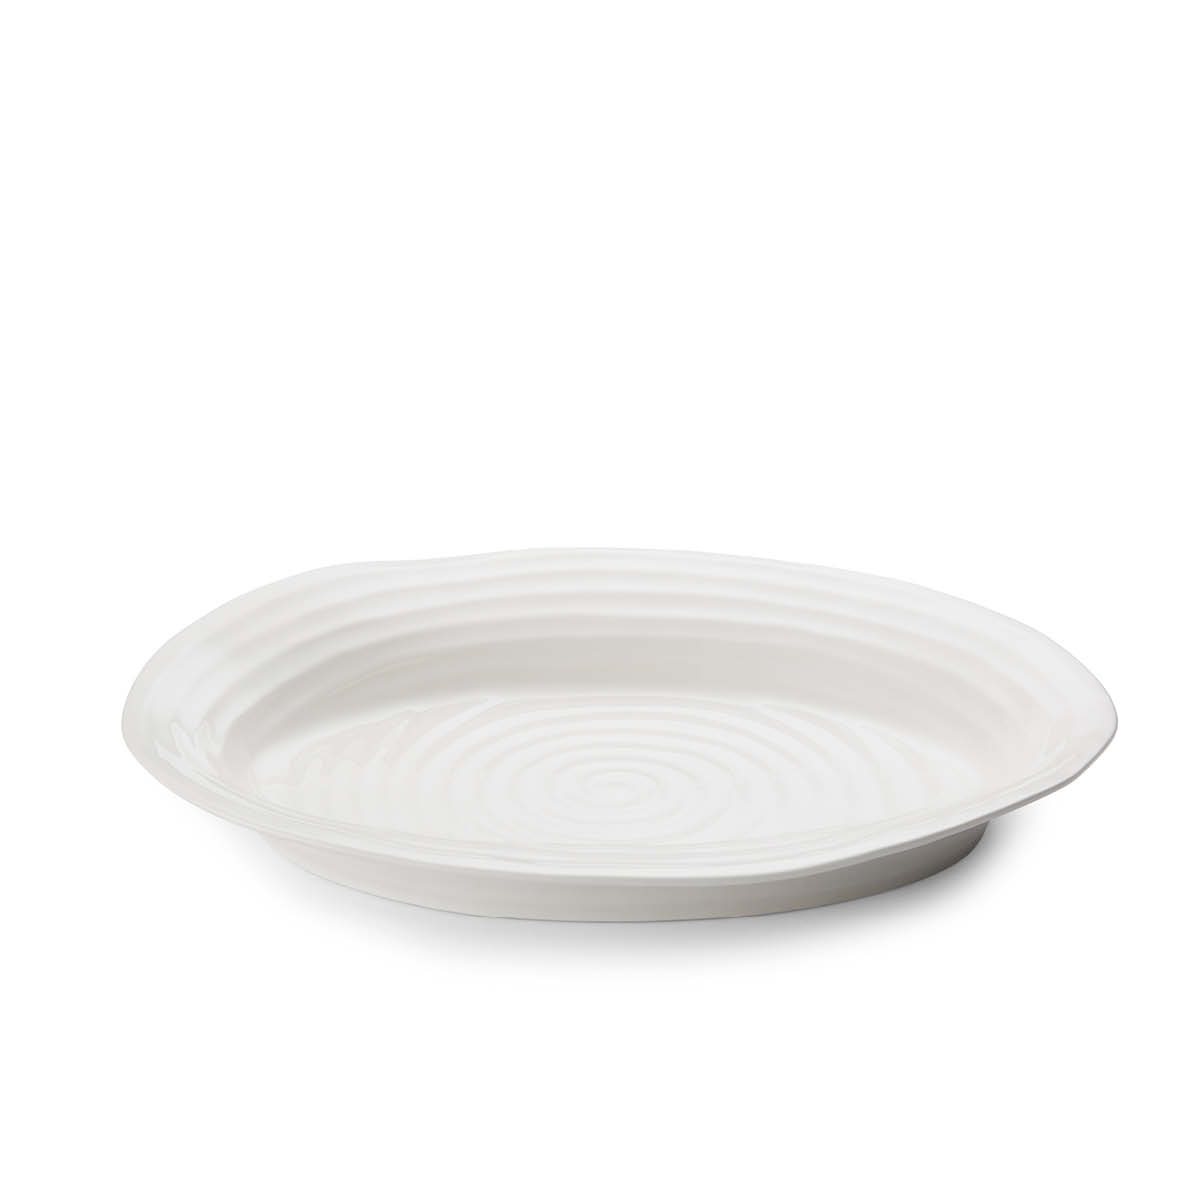 Sophie Conran Medium Oval Plate, White